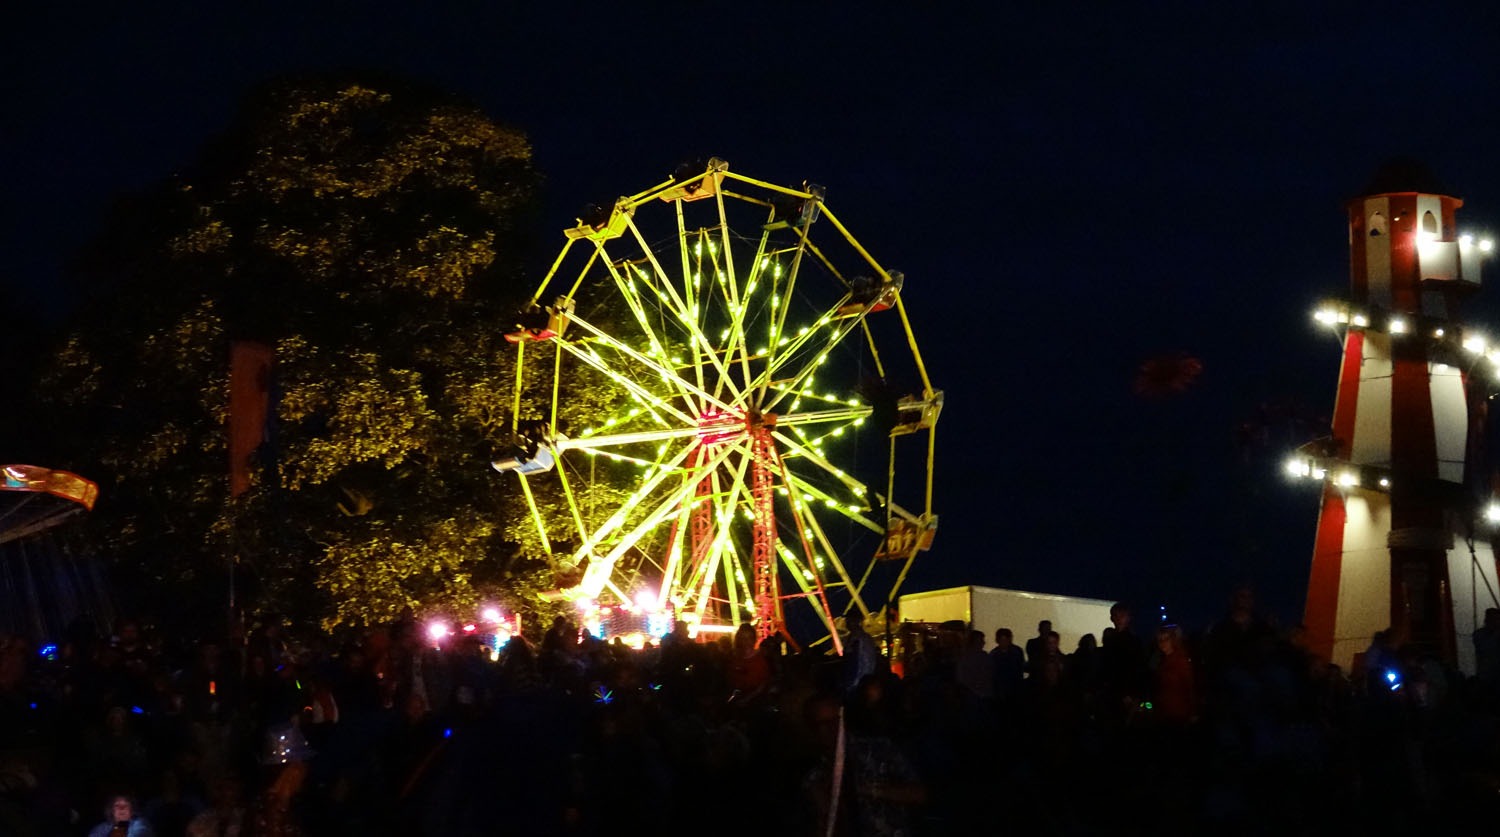 The big wheel at Deer shed festival 2018